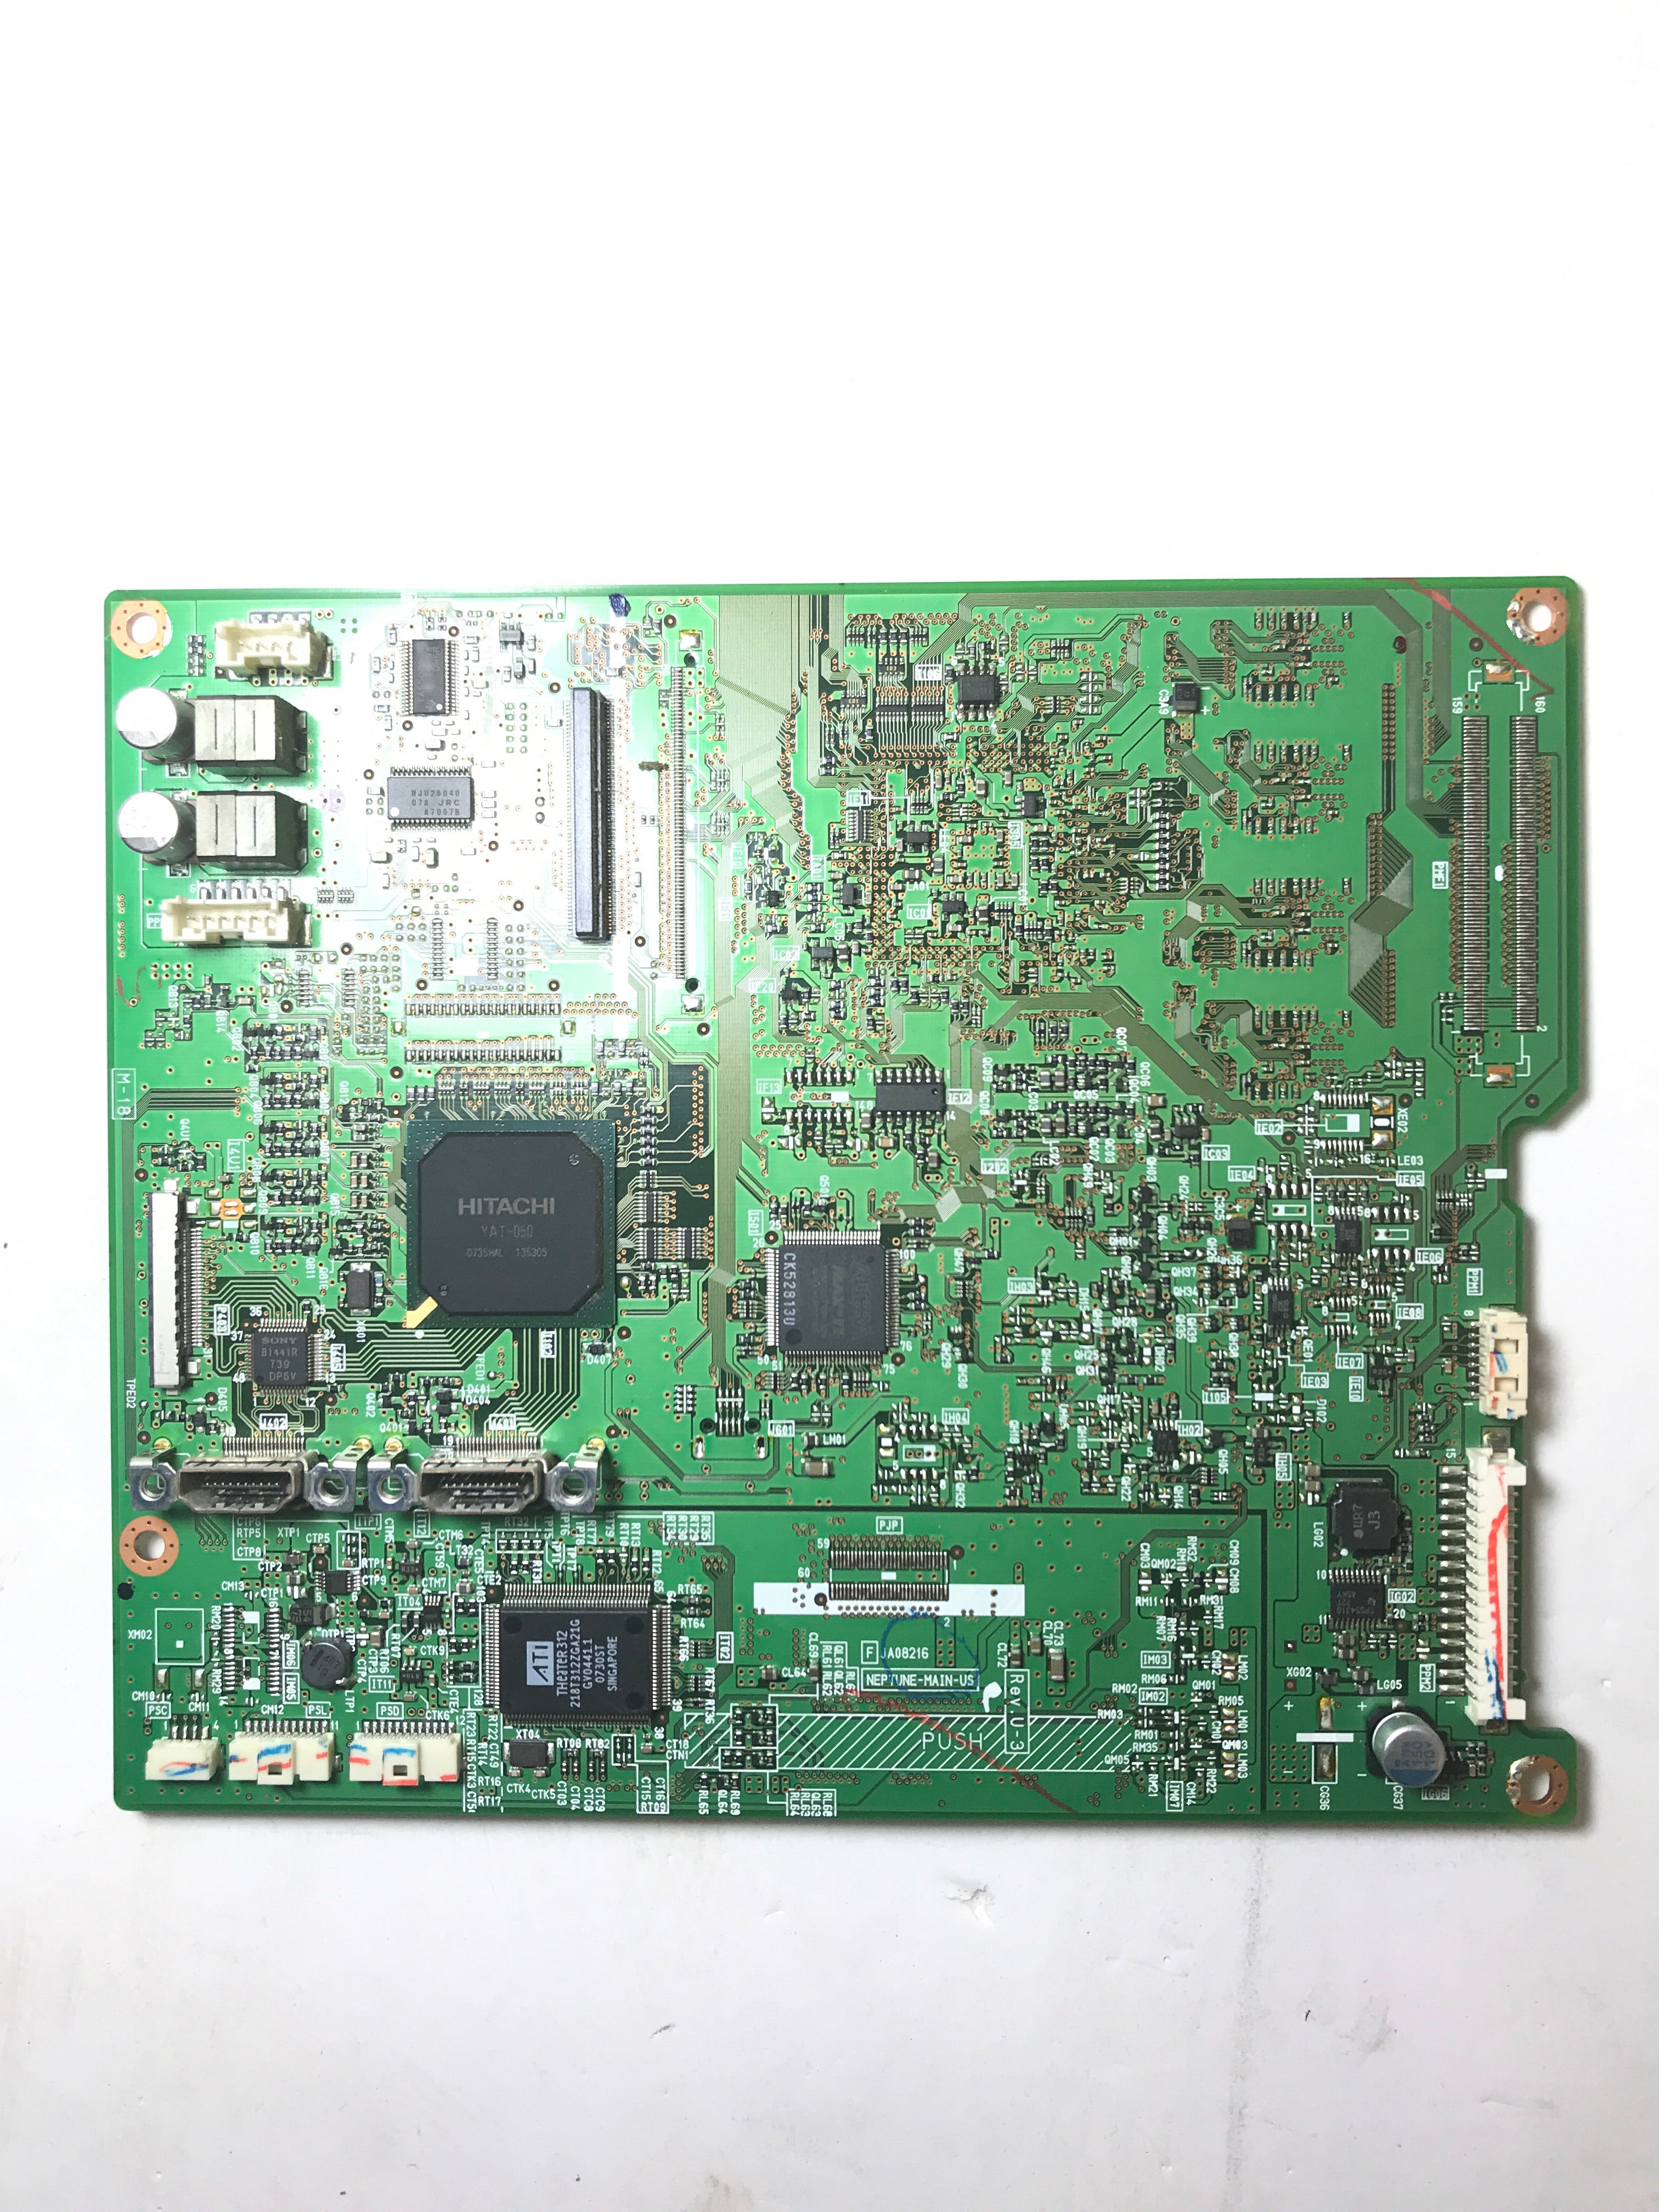 Hitachi JP55153 (JA08216) Main Digital Board